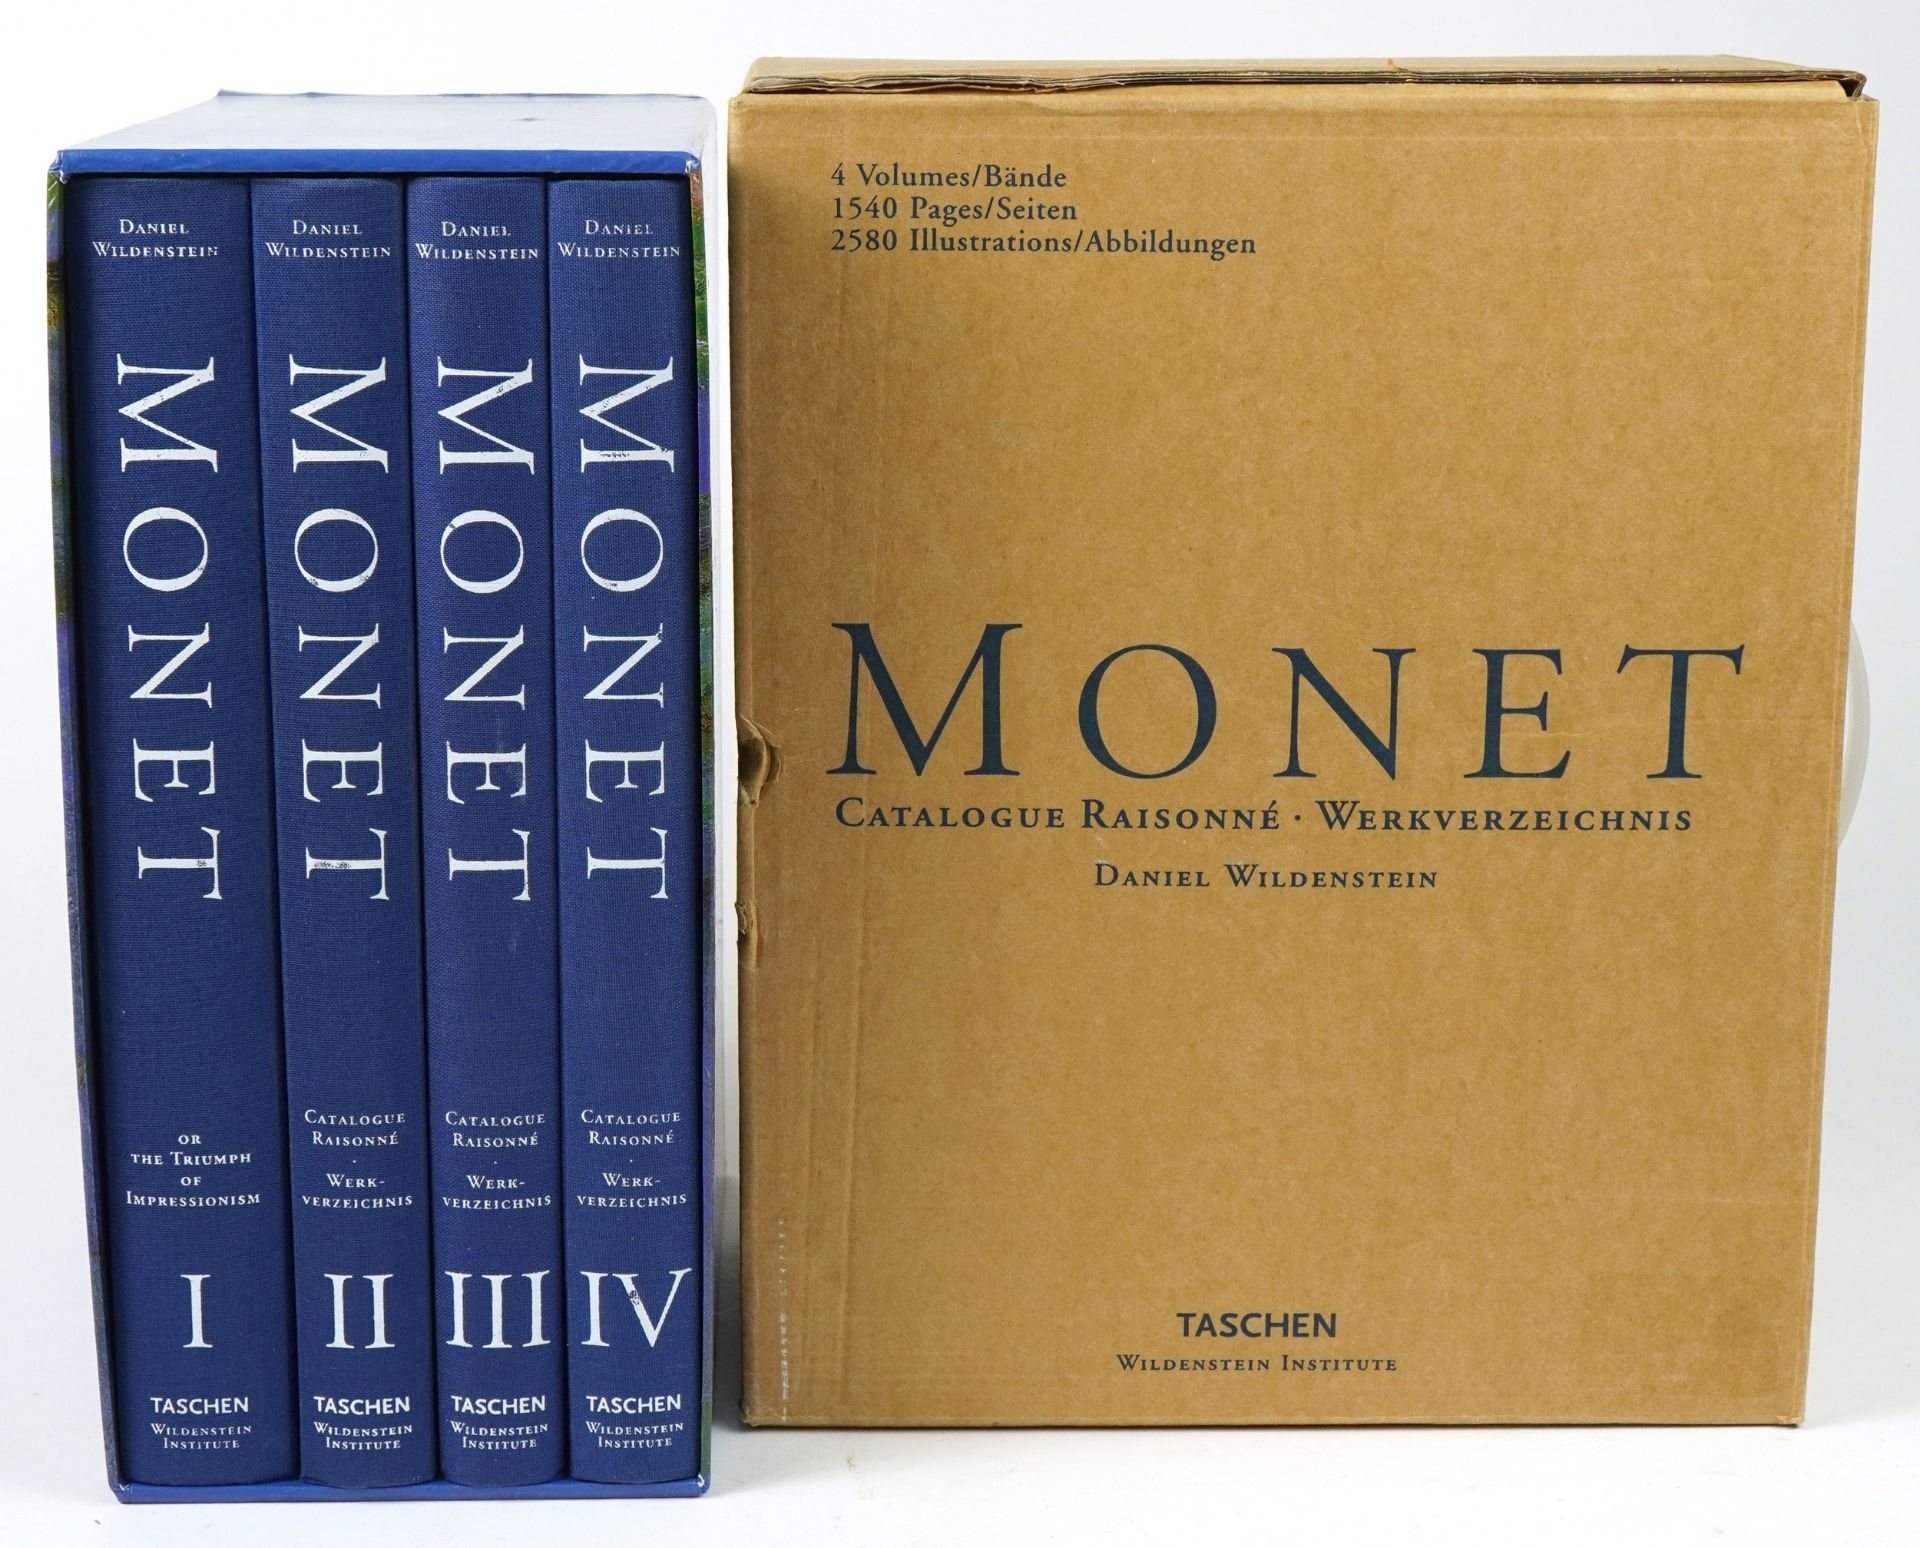 Monet Catalogue Raisonne, four volumes by Daniel Wildenstein published by Taschen : For further